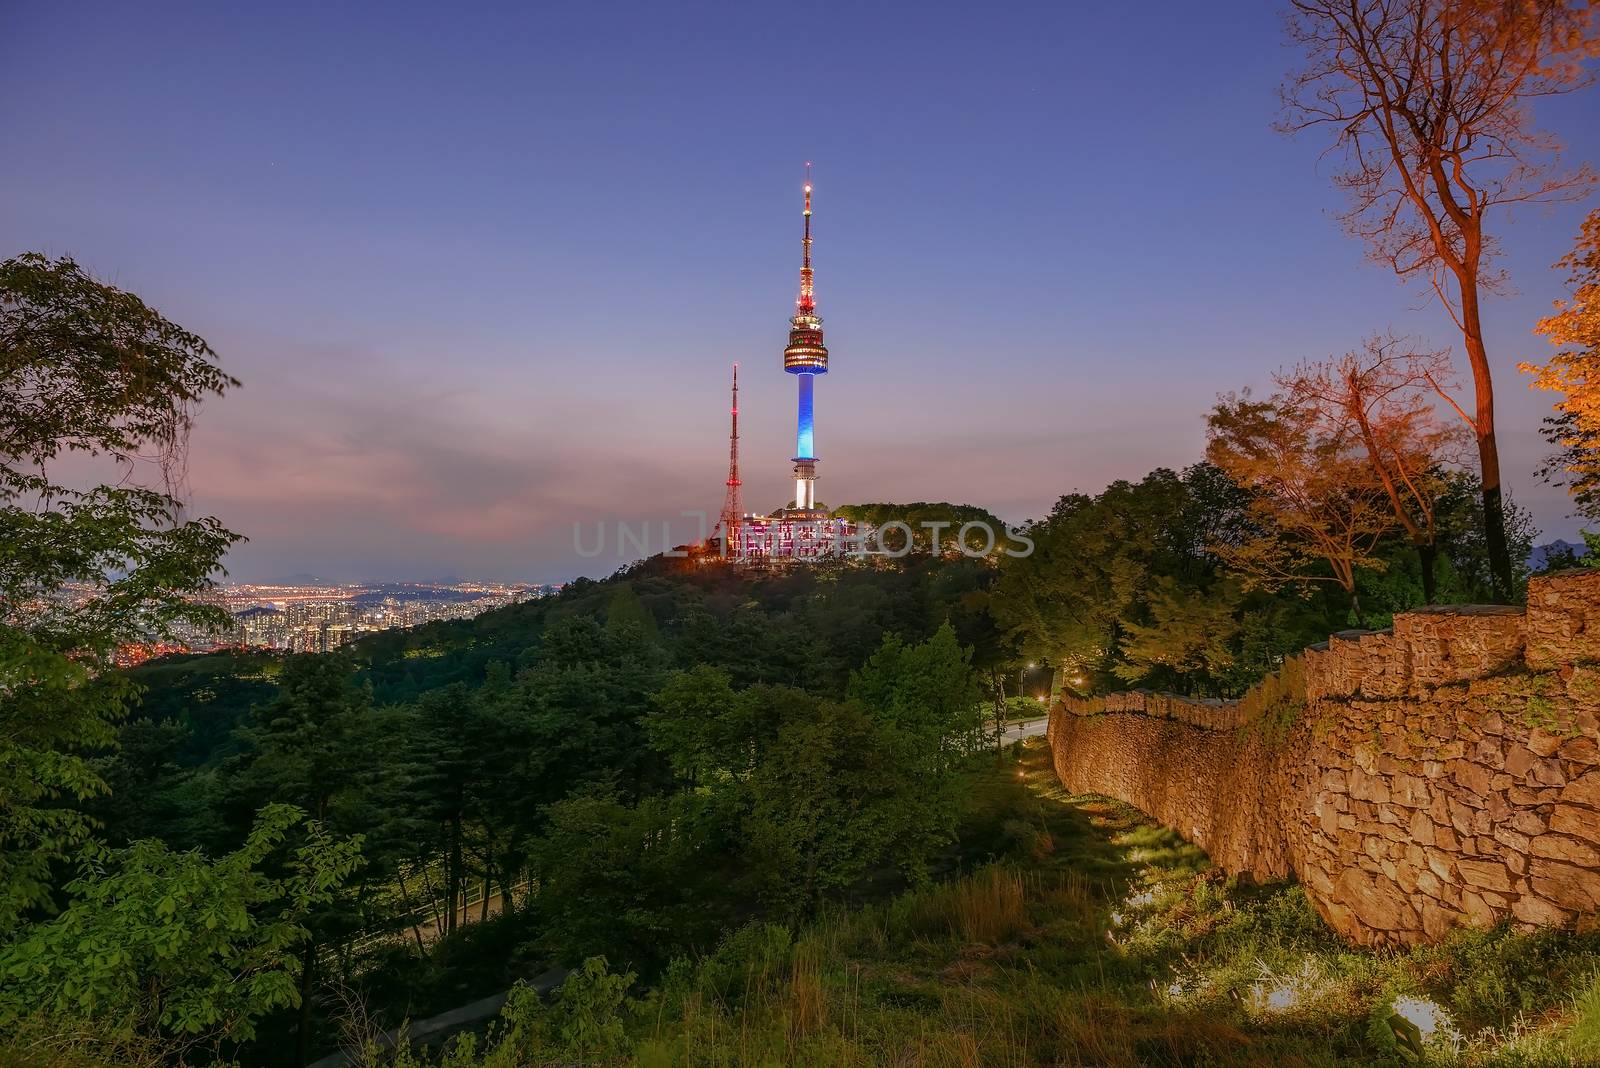 Seoul tower,Namsan tower in korea by wijitamkapet@gmail.com